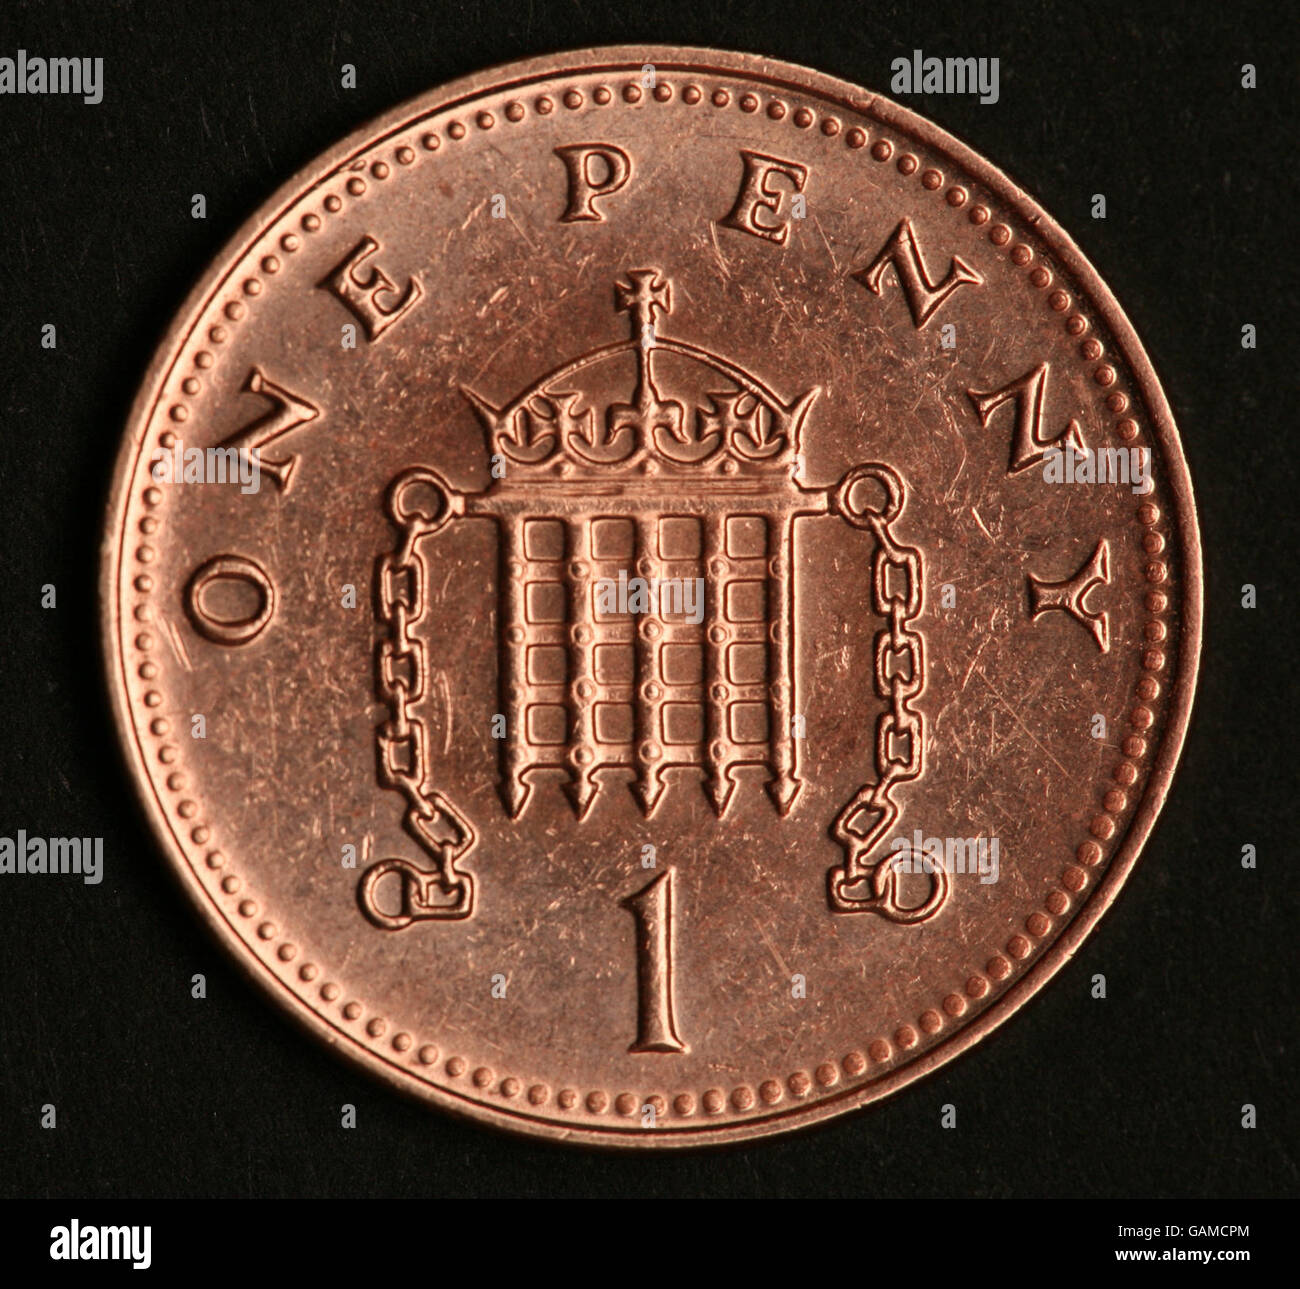 Münzen. Eine 1 Pence Münze. Stockfoto